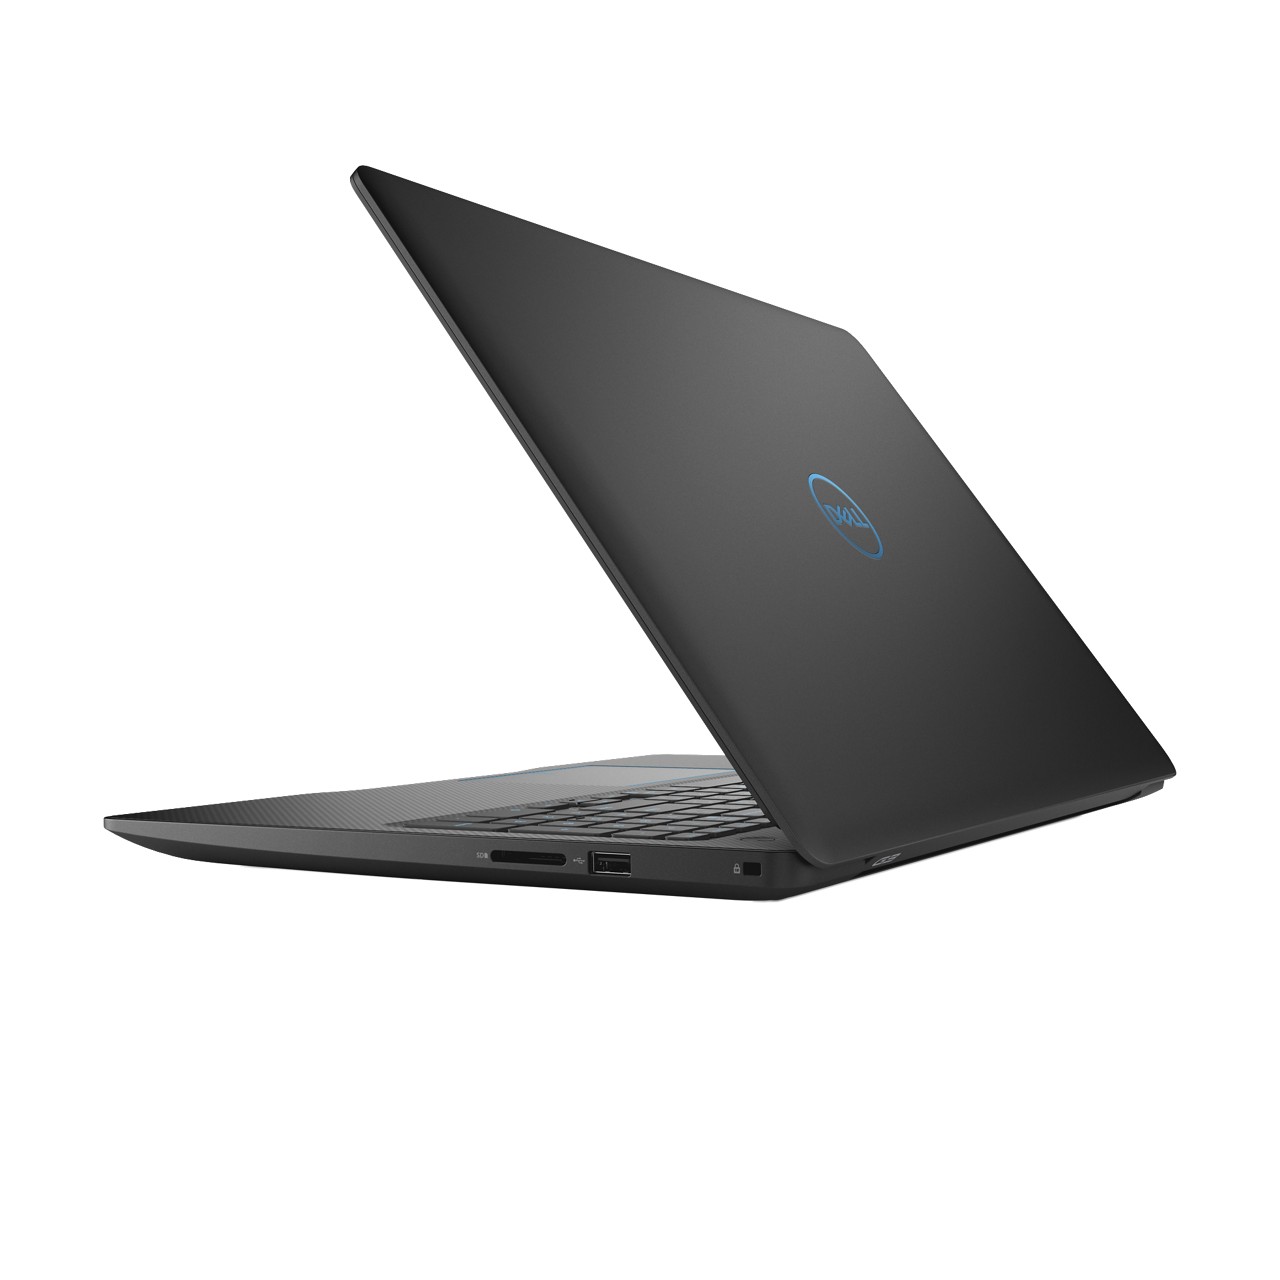 Dell G3 Gaming Laptop 15.6" Full HD, Intel Core i7-8750H, NVIDIA GeForce GTX 1050 Ti 4GB, 1TB HDD Storage, 24GB Total Memory (8GB + 16GB Intel Optane), G3579-7283BLK-PUS - image 2 of 6